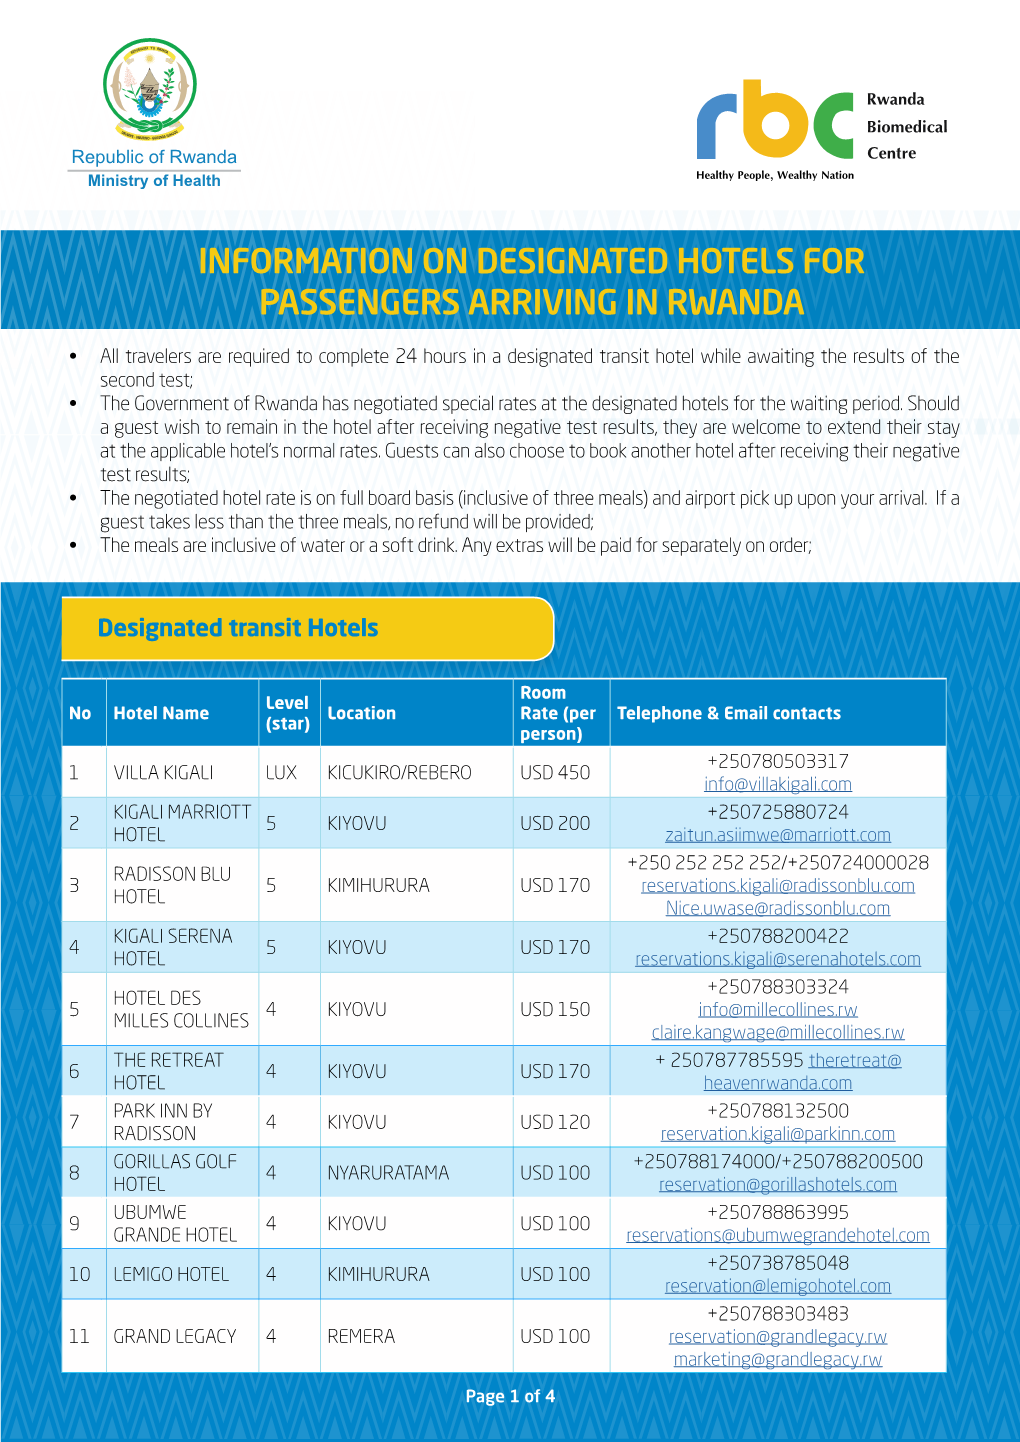 Designated Hotels for Passengers Arriving in Rwanda